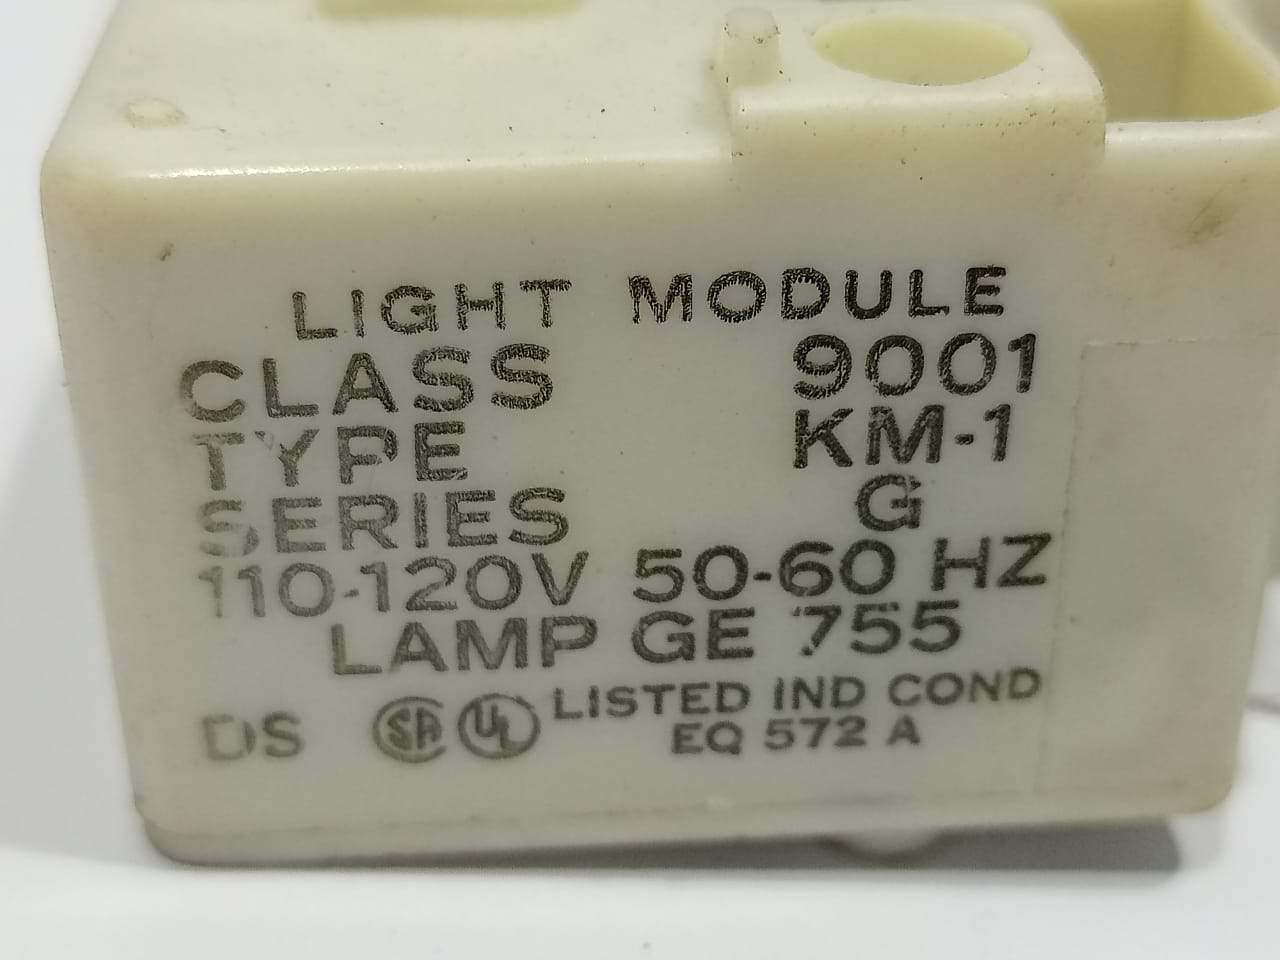 Square D 9001 KM-1 Light Module